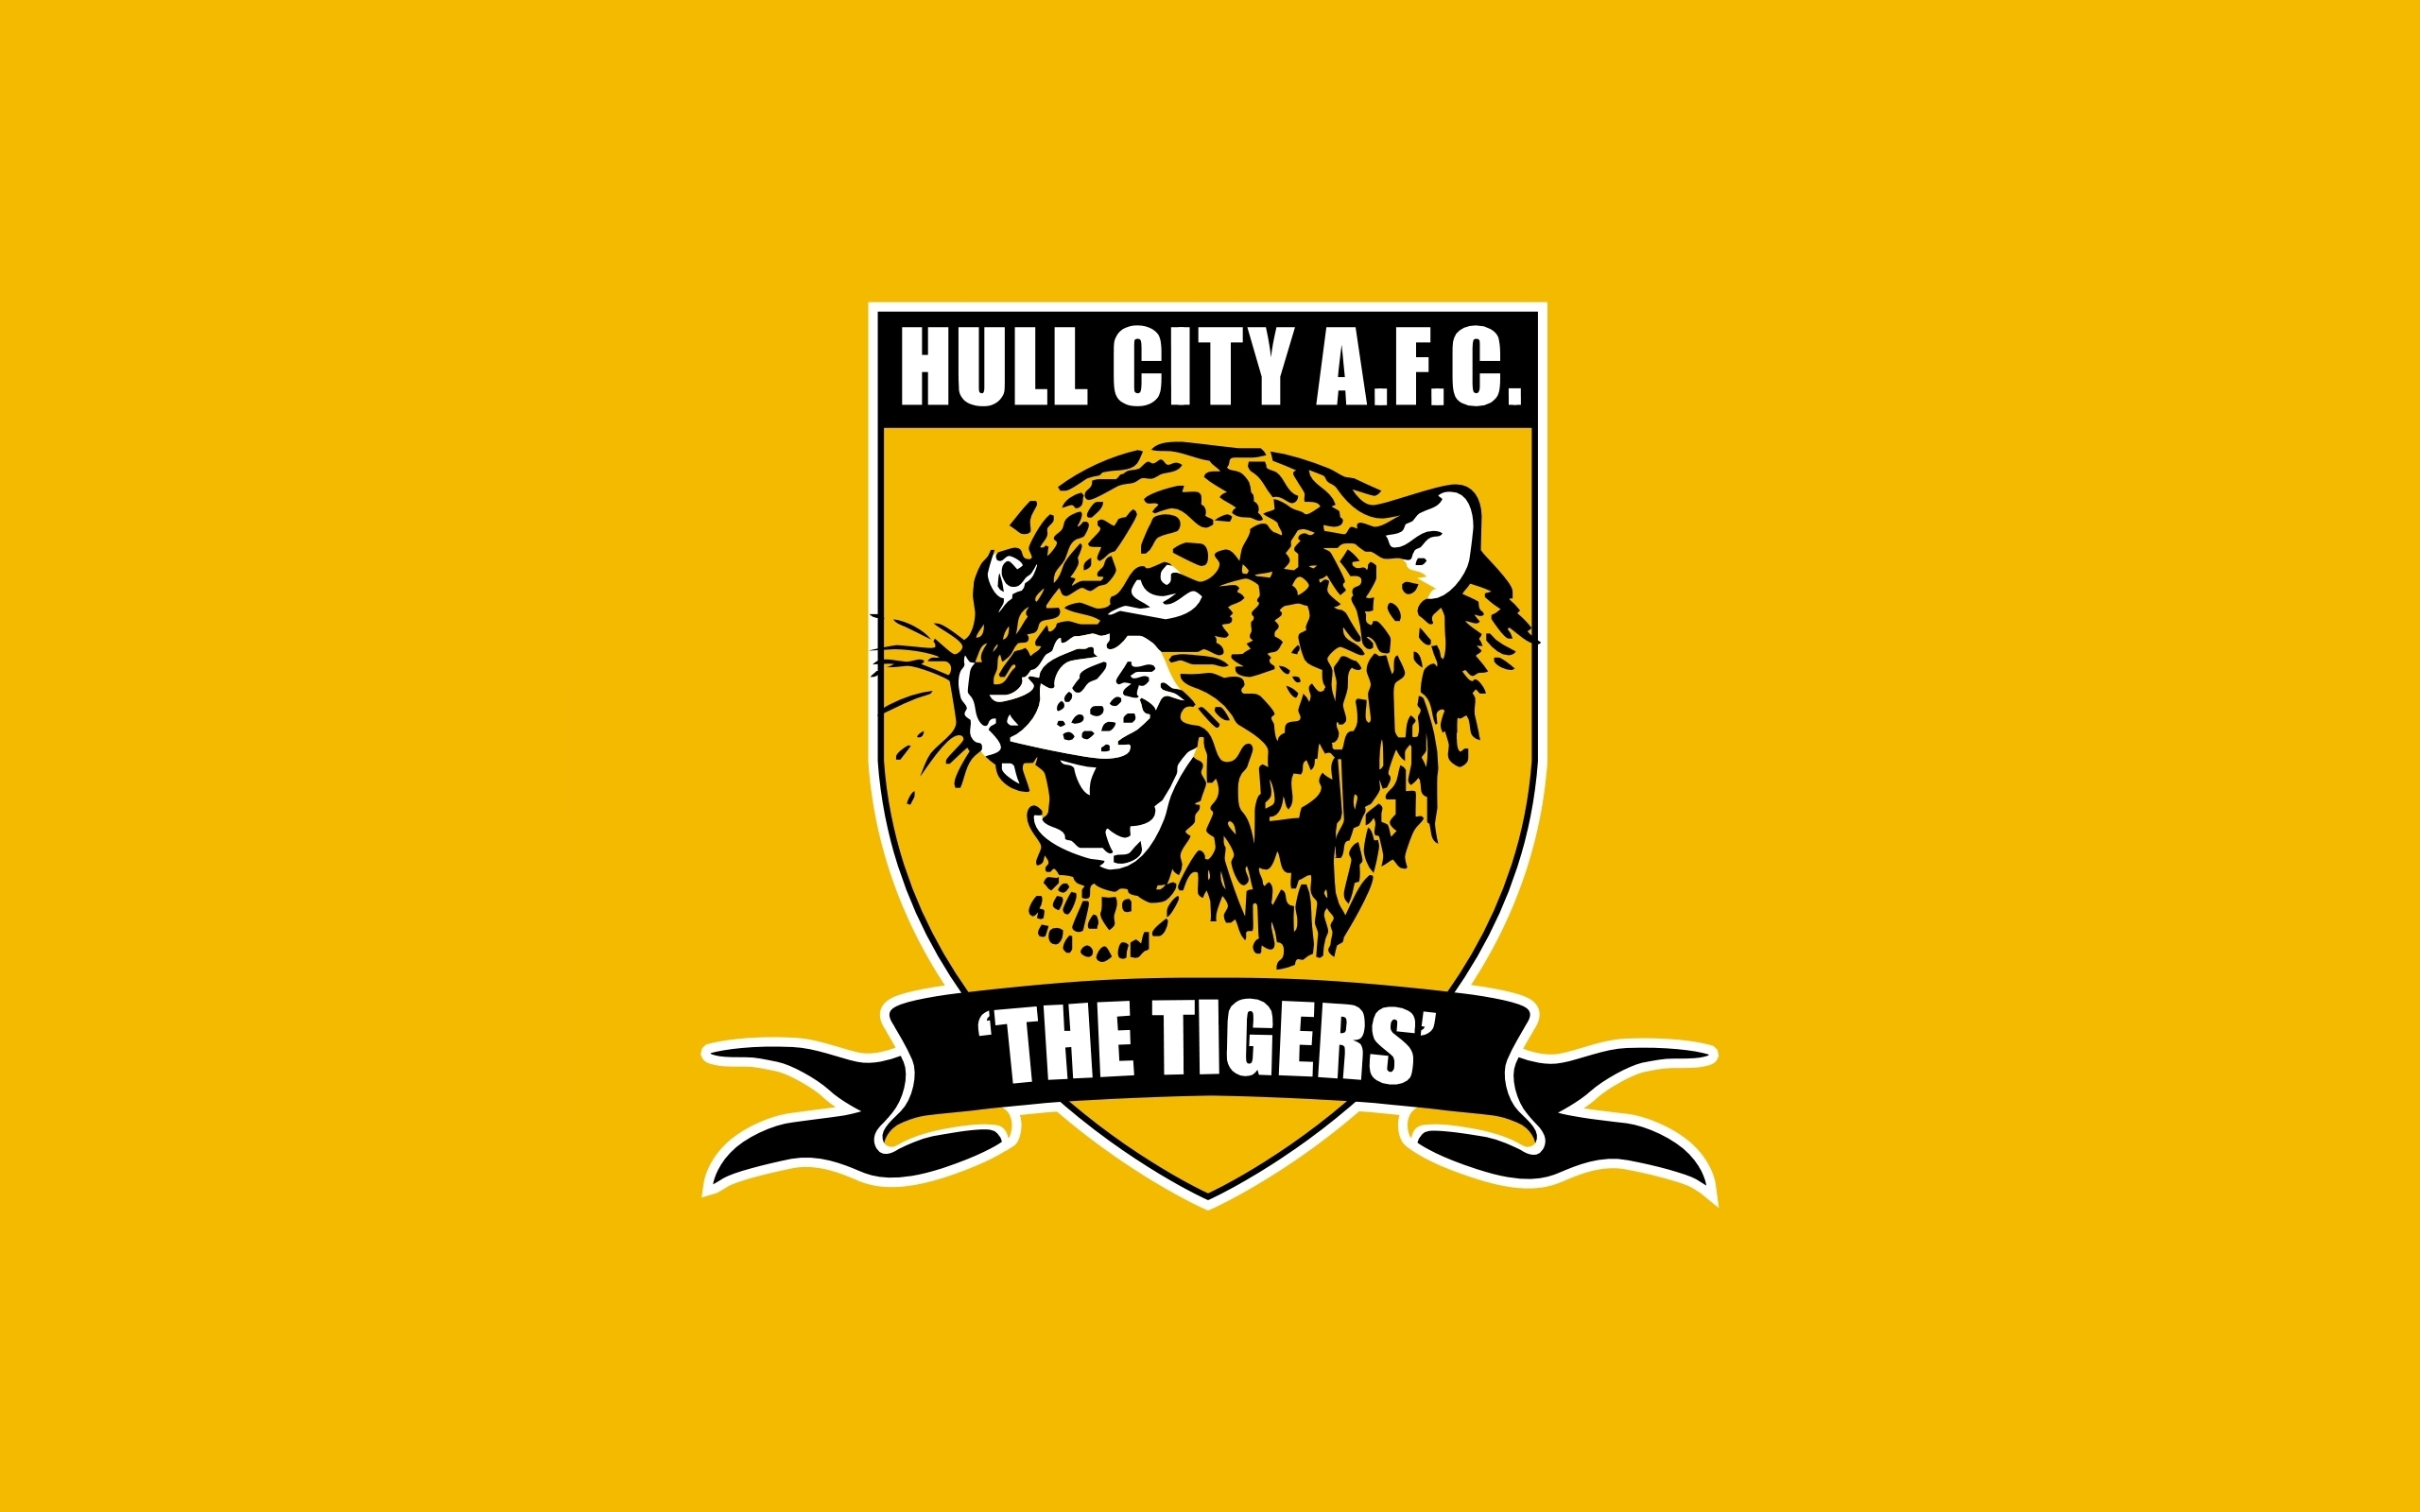 Hull city. Халл Сити. Эмблема Халл Сити. Футбольный клуб Халл Сити. Hull City logo Wallpaper.